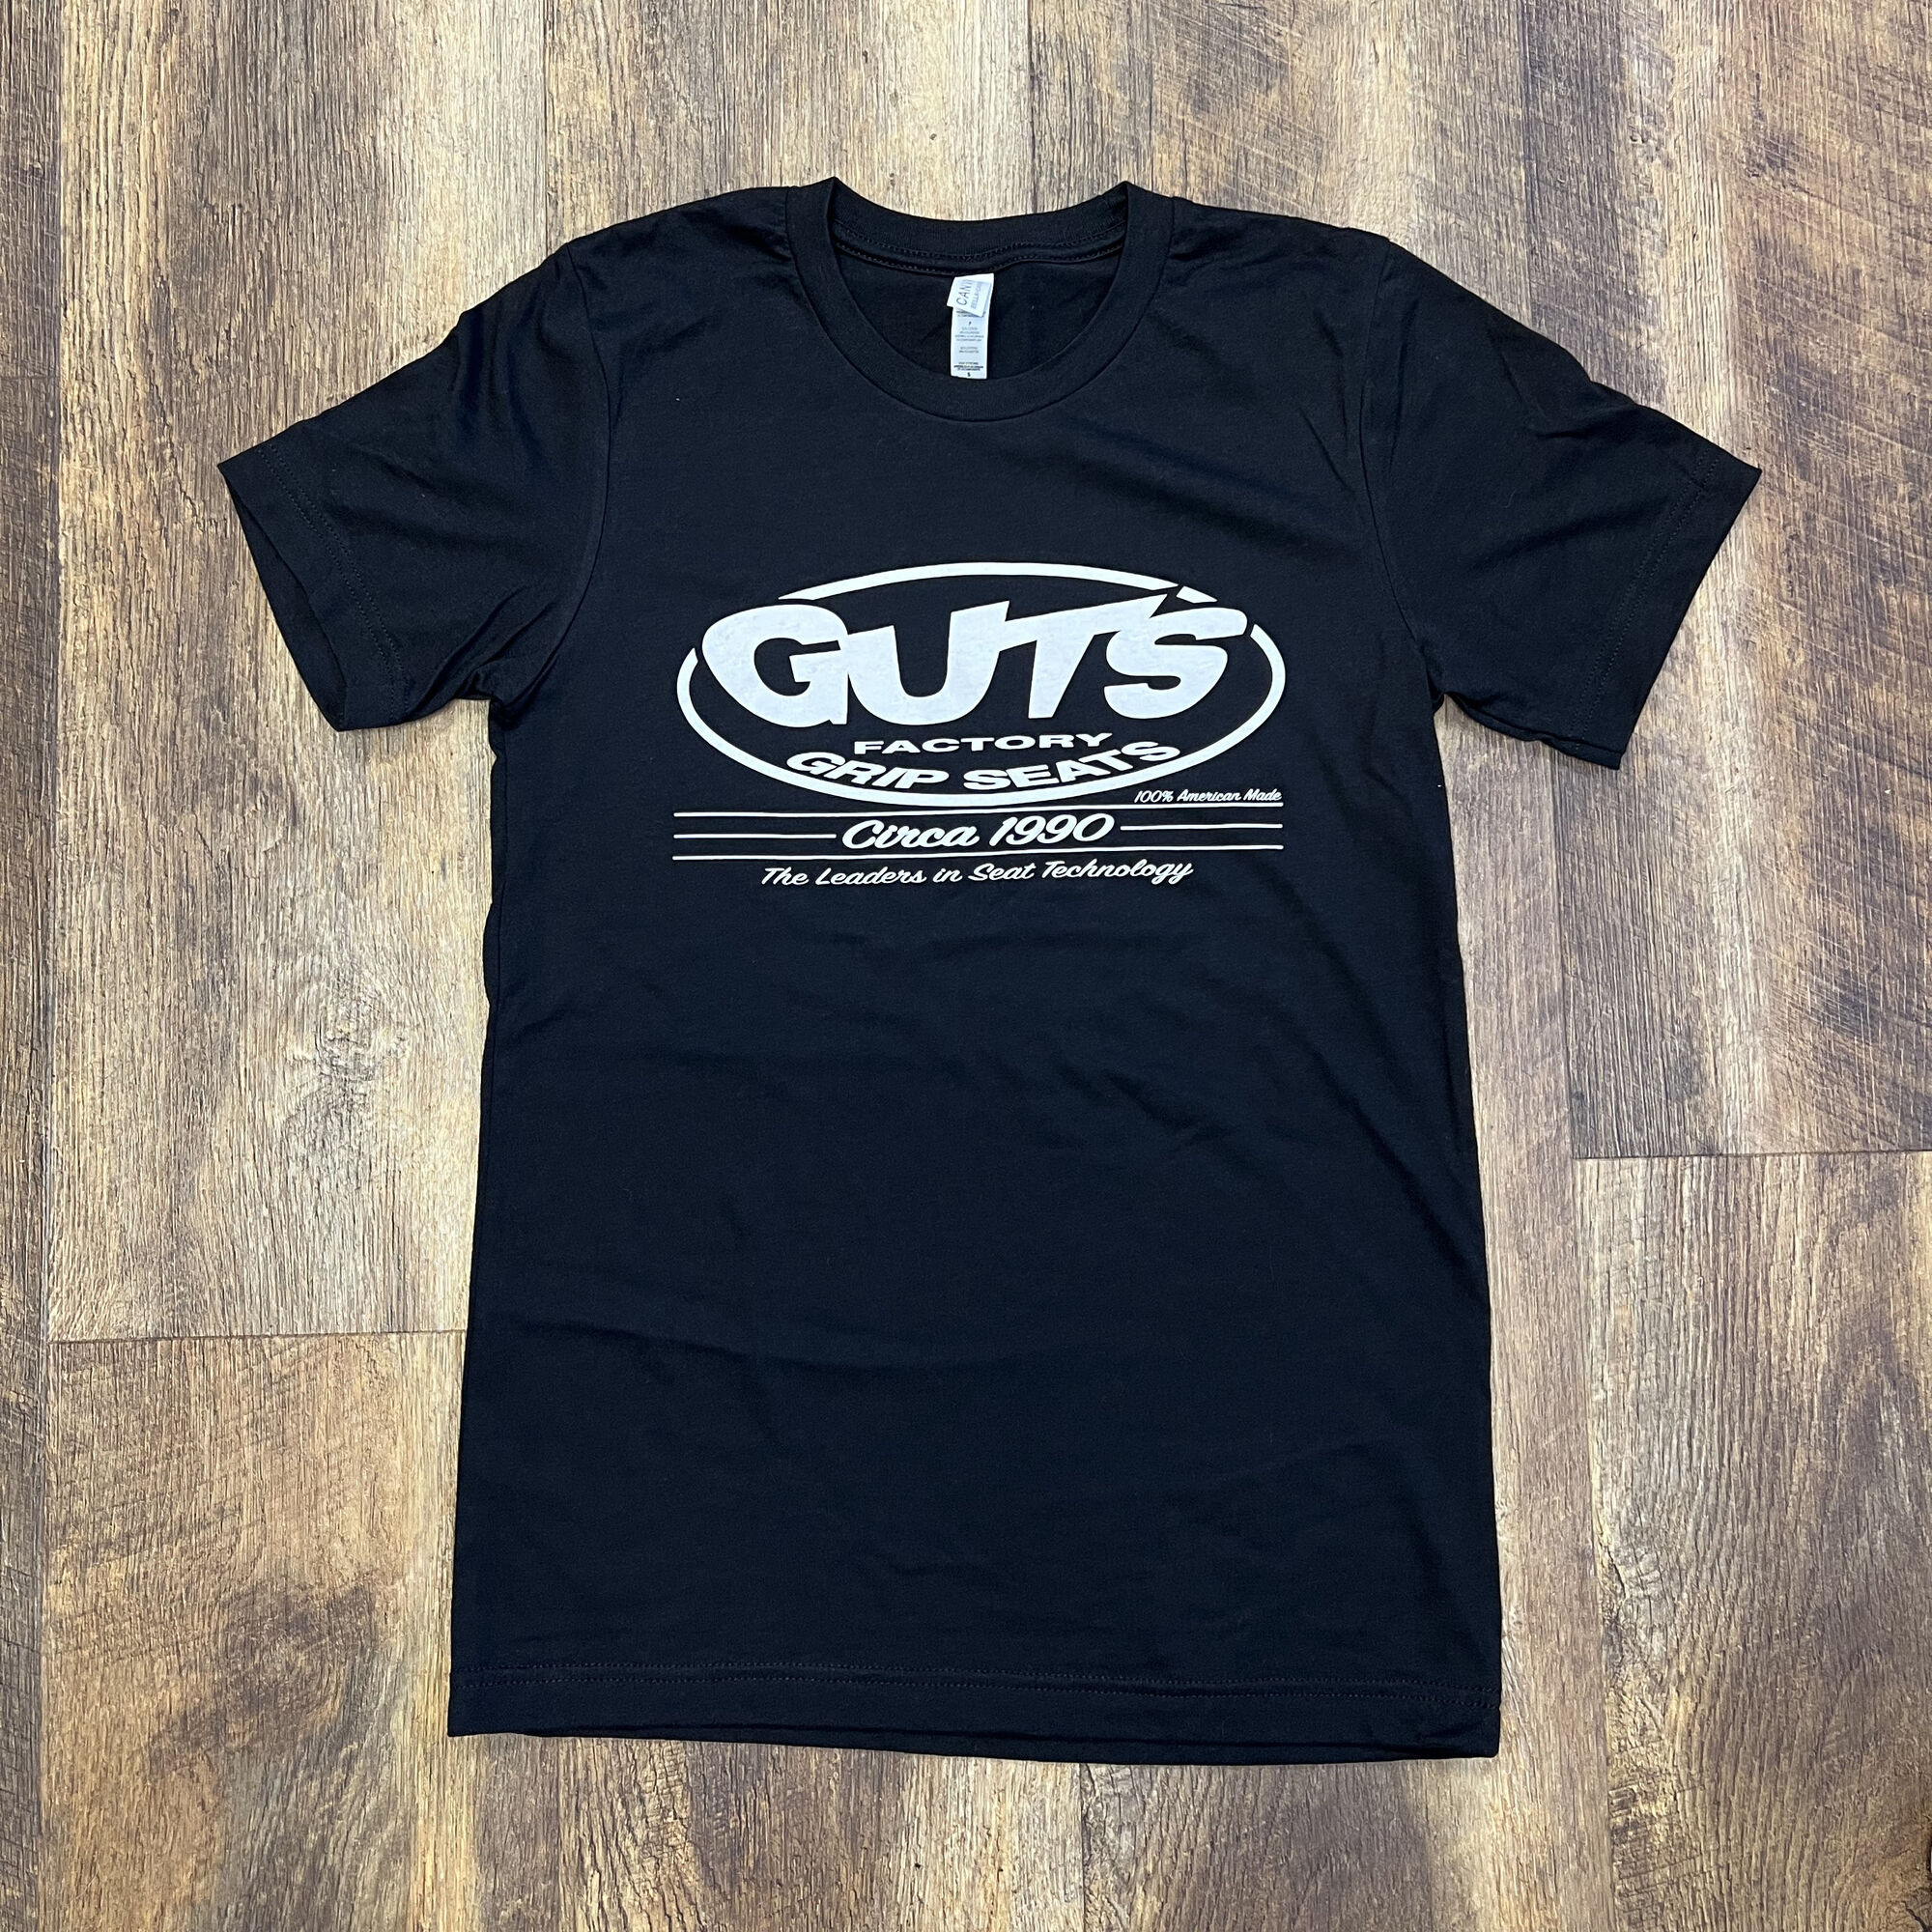 Rep GUTS Your Favorite Brand - Guts Racing